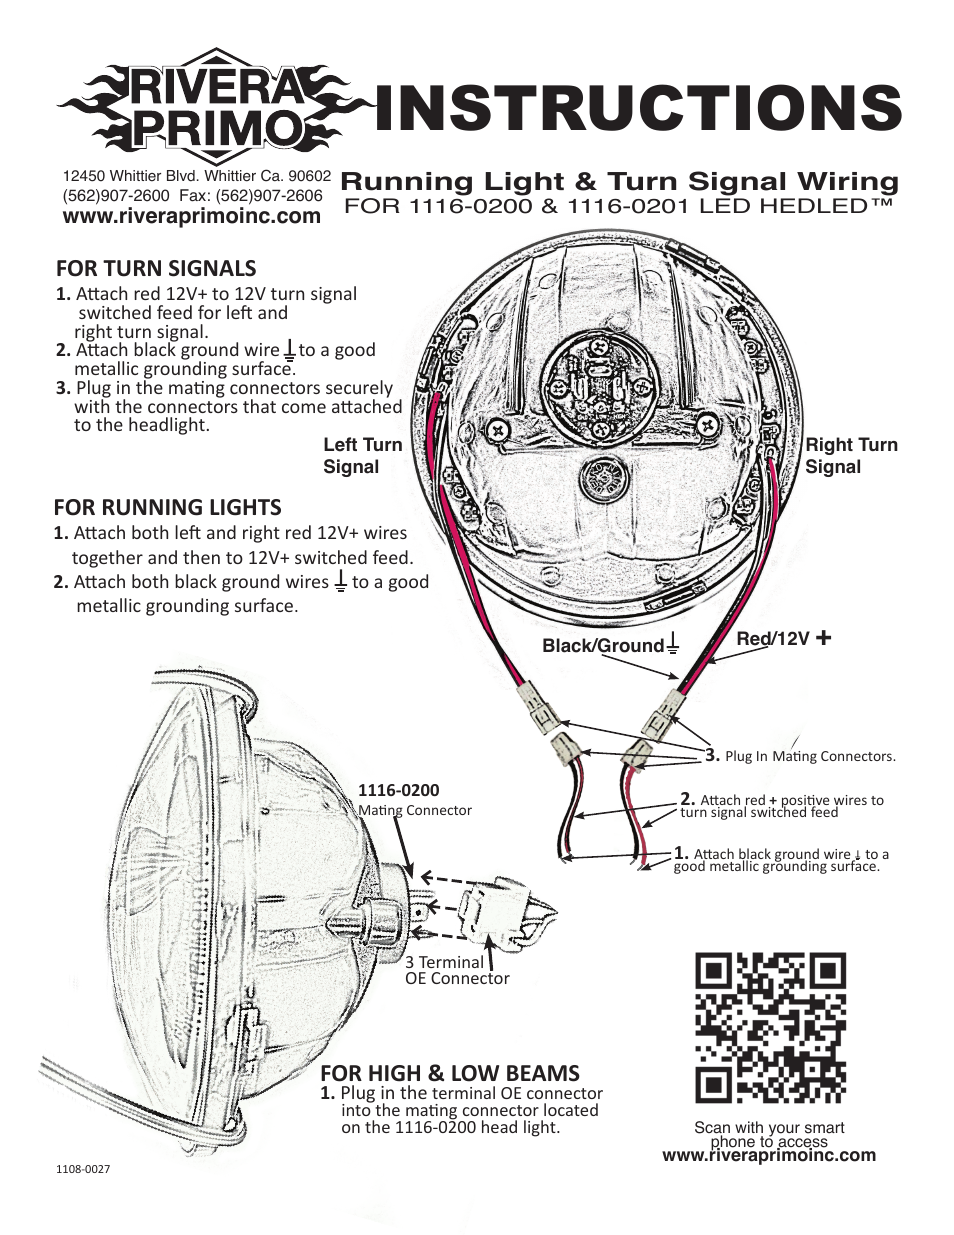 Running Light & Turn Signal Wiring for 1116-0200LED HedLED